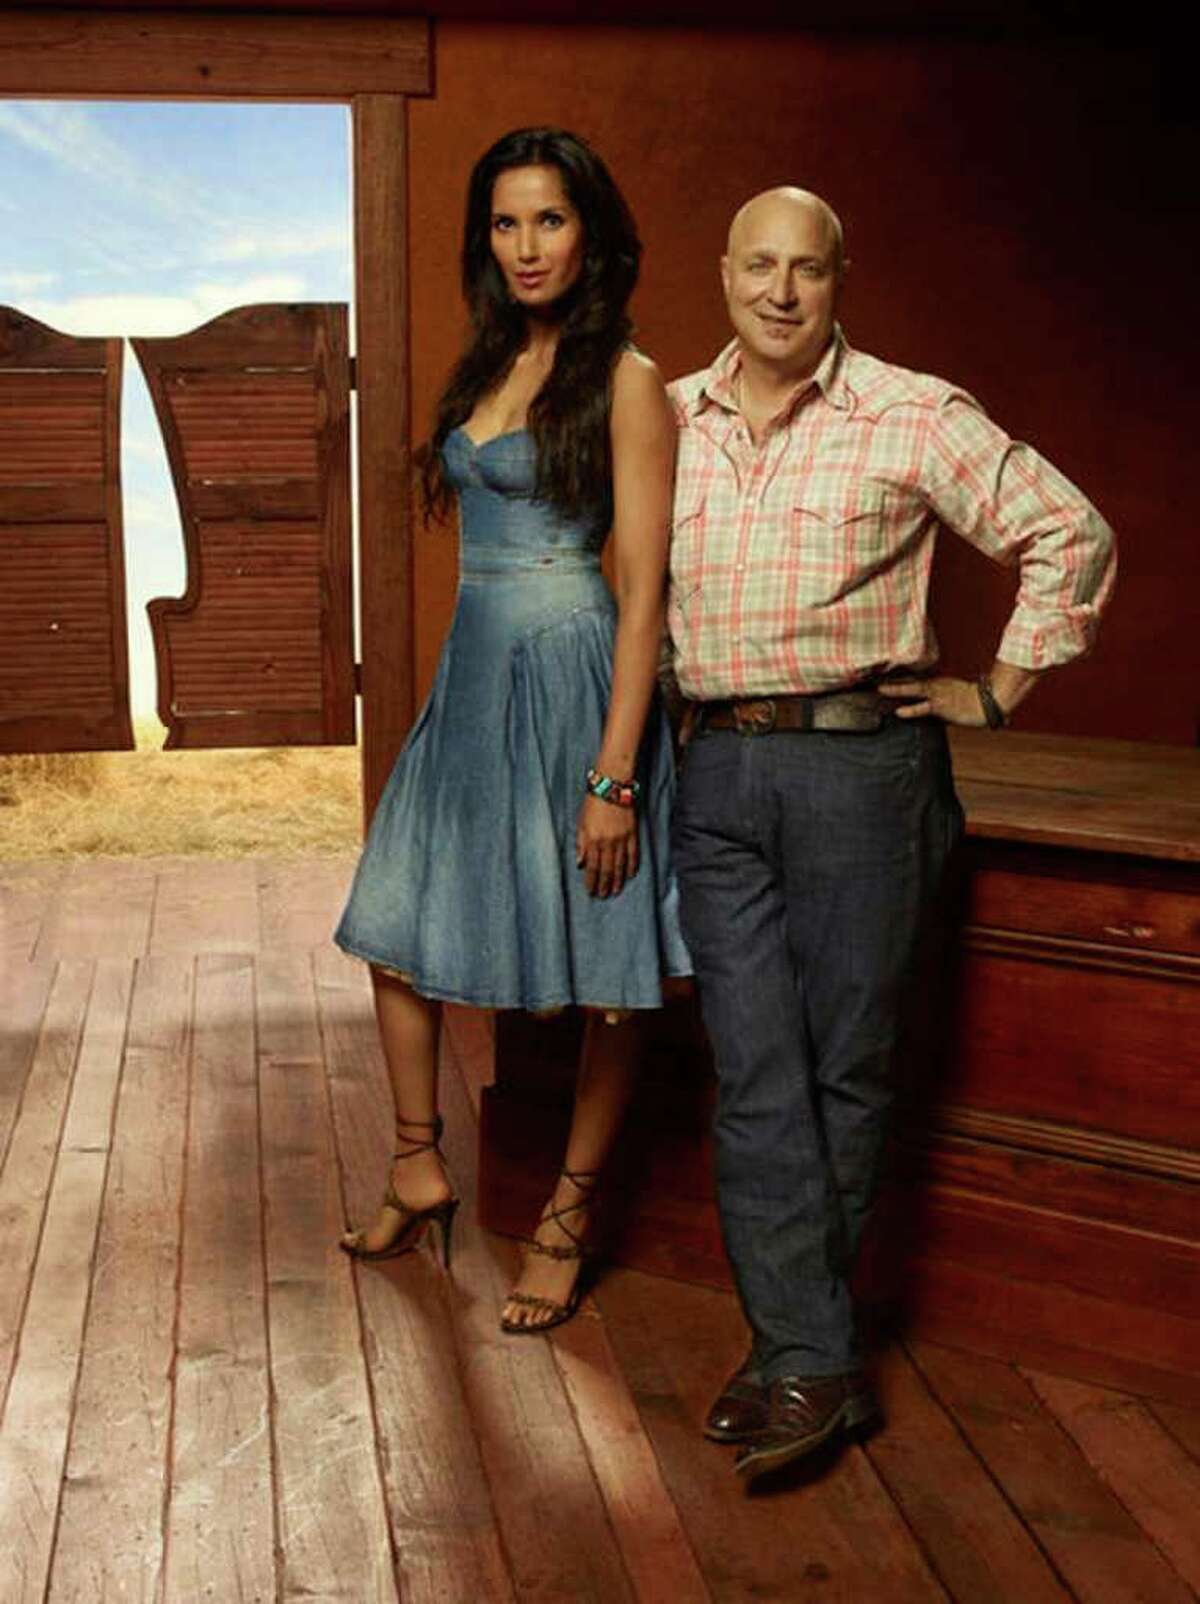 Season nine of Top Chef with Padma Lakshmi and Tom Colicchio had episodes shot in San Antonio.